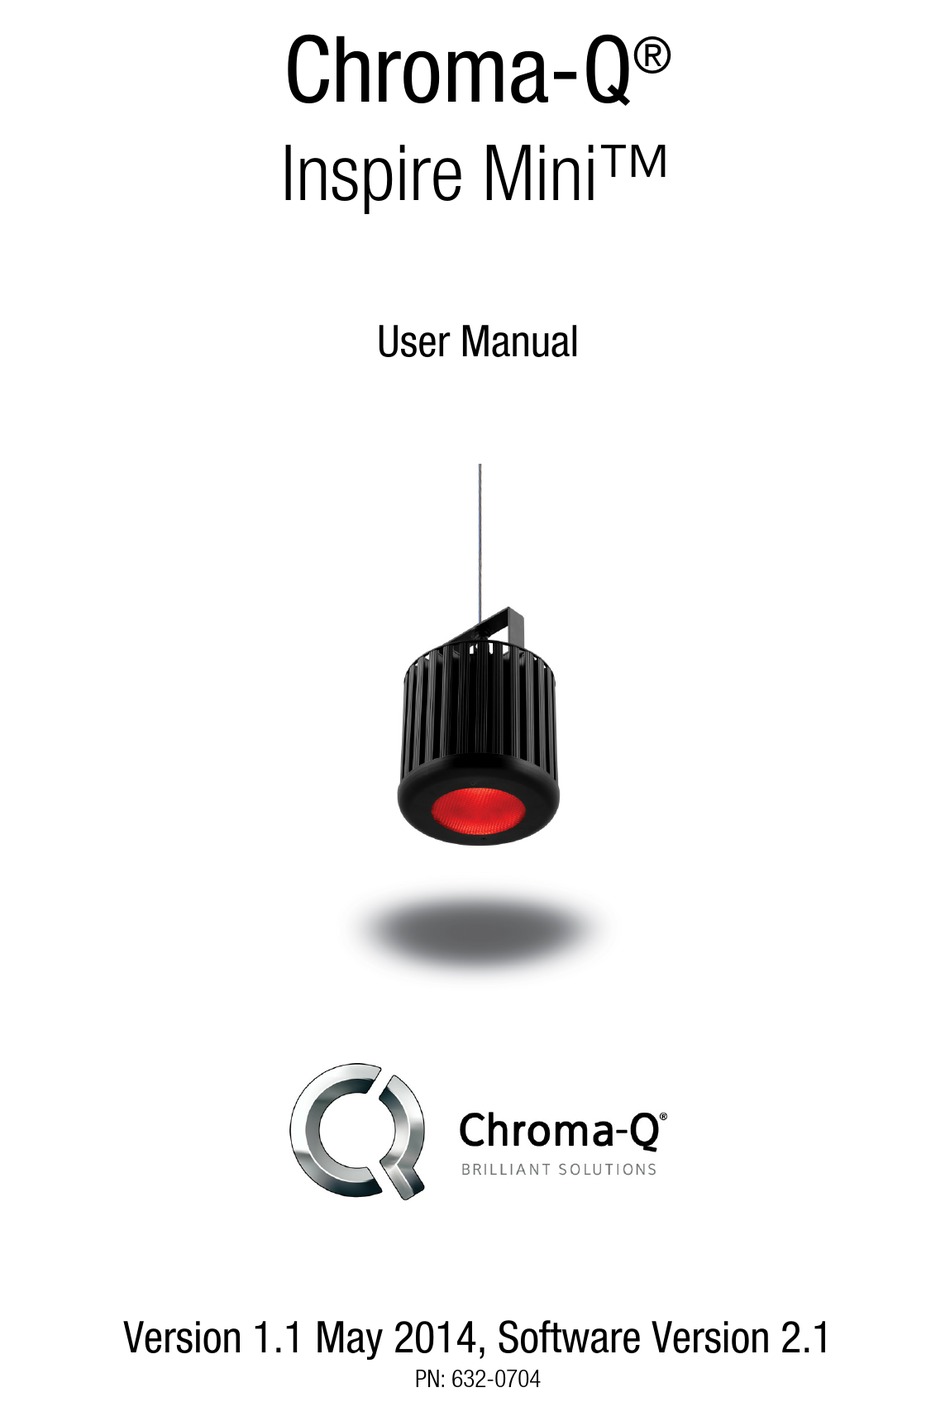 CHROMA INSPIRE MINI USER MANUAL Pdf Download | ManualsLib